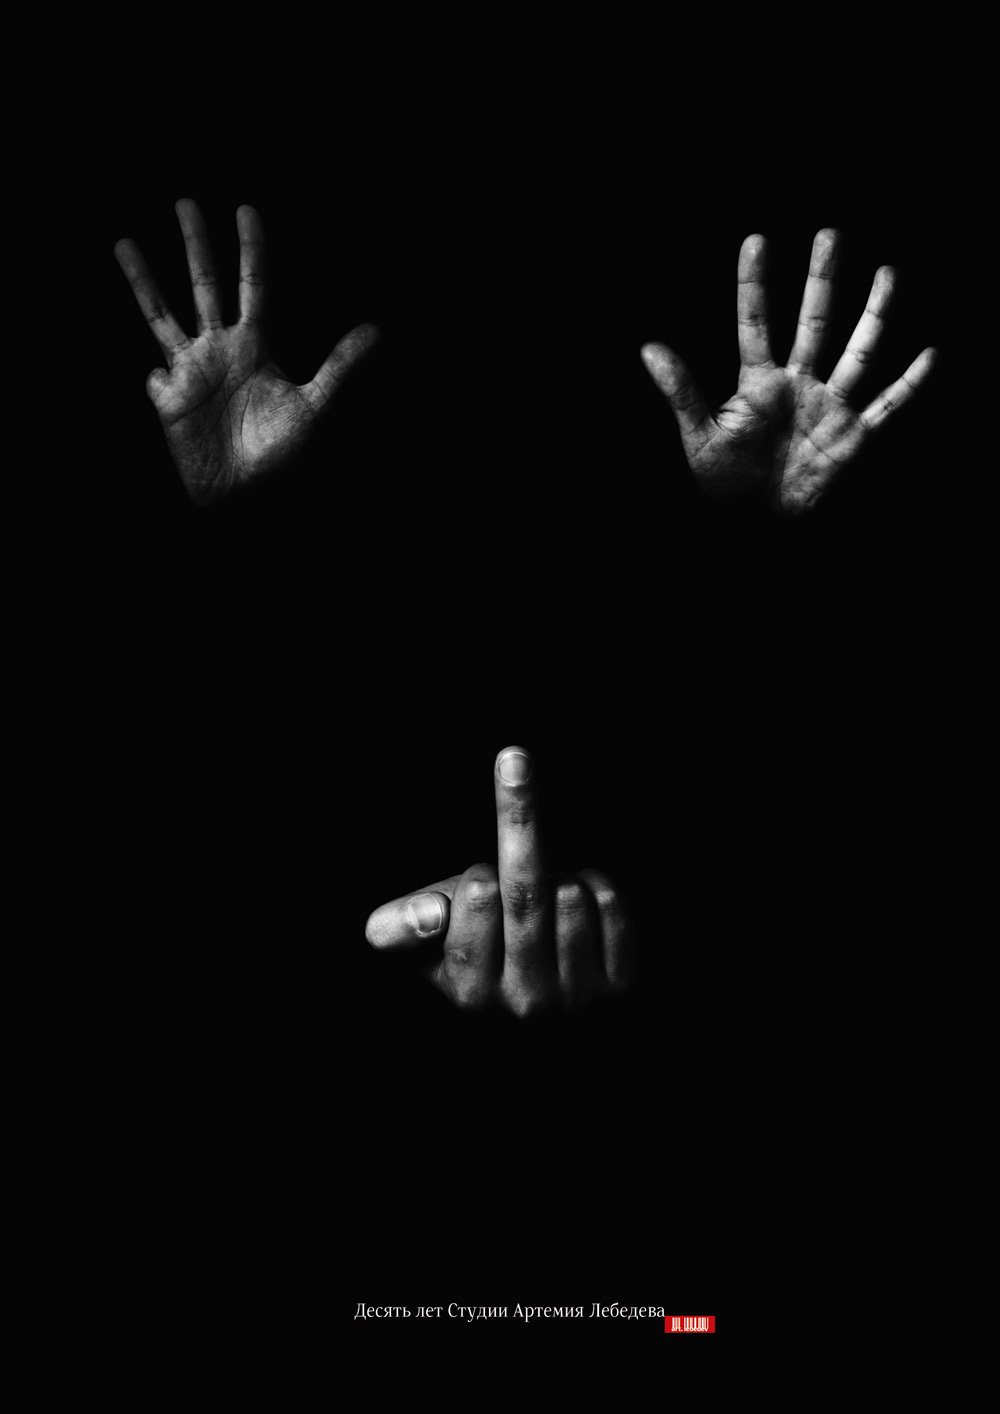 Средний палец на темном фоне